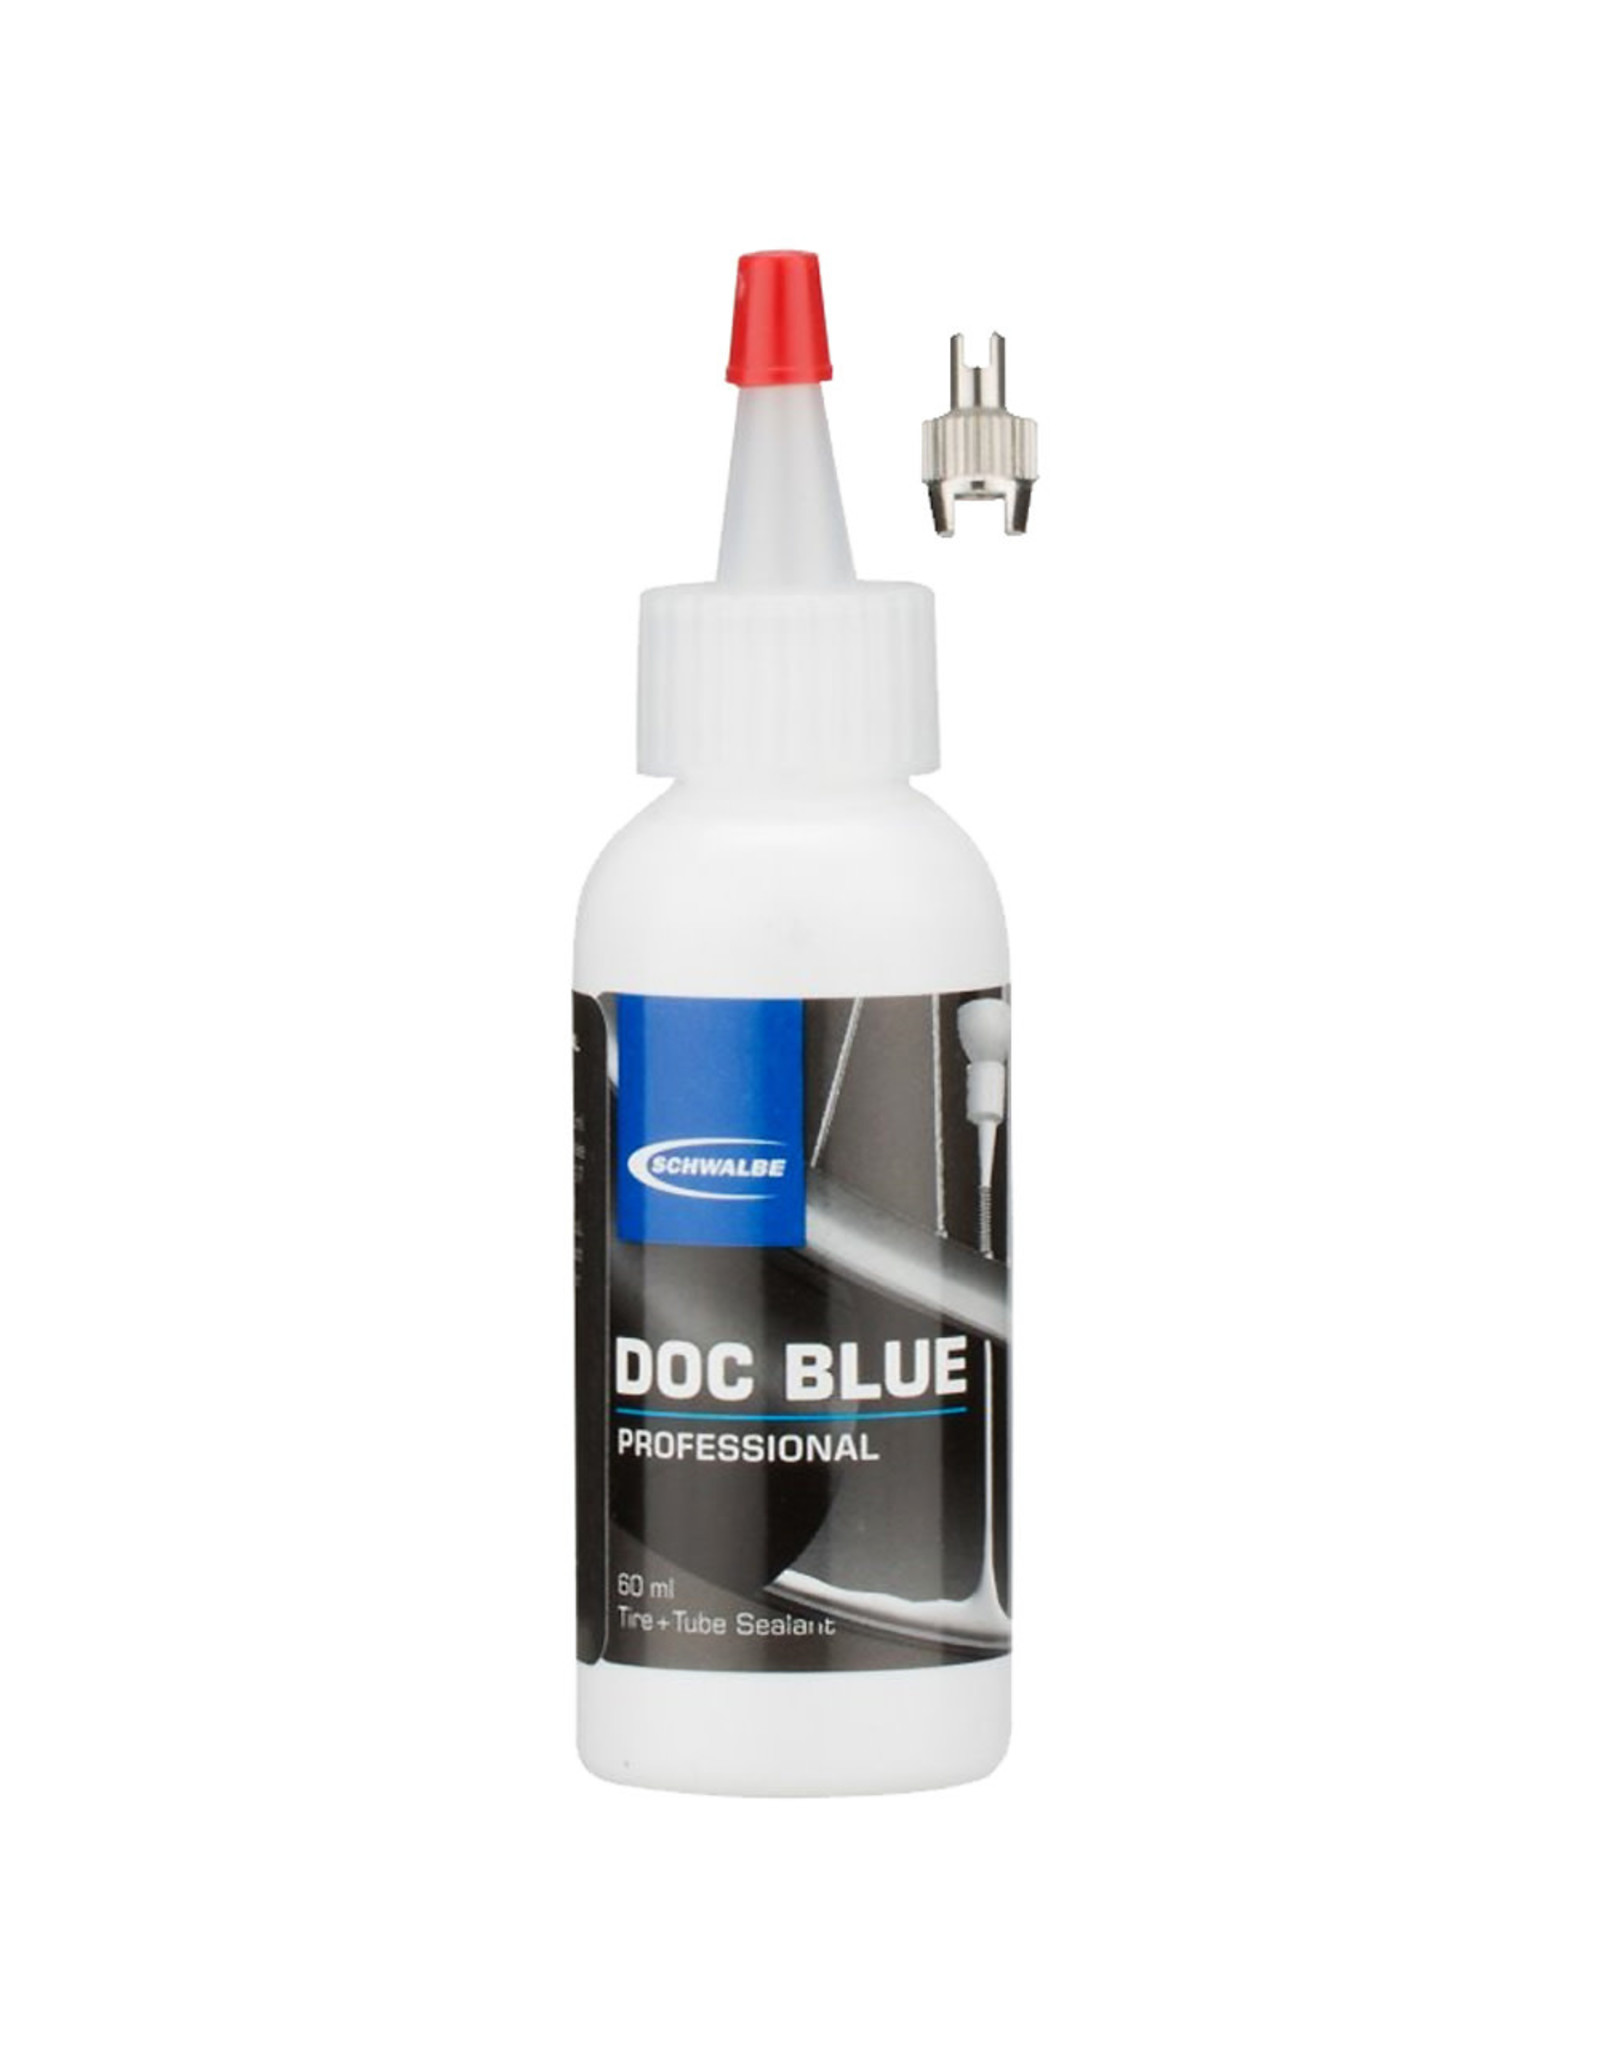 Doc Blue Doc Blue Pro 60ml Sealant